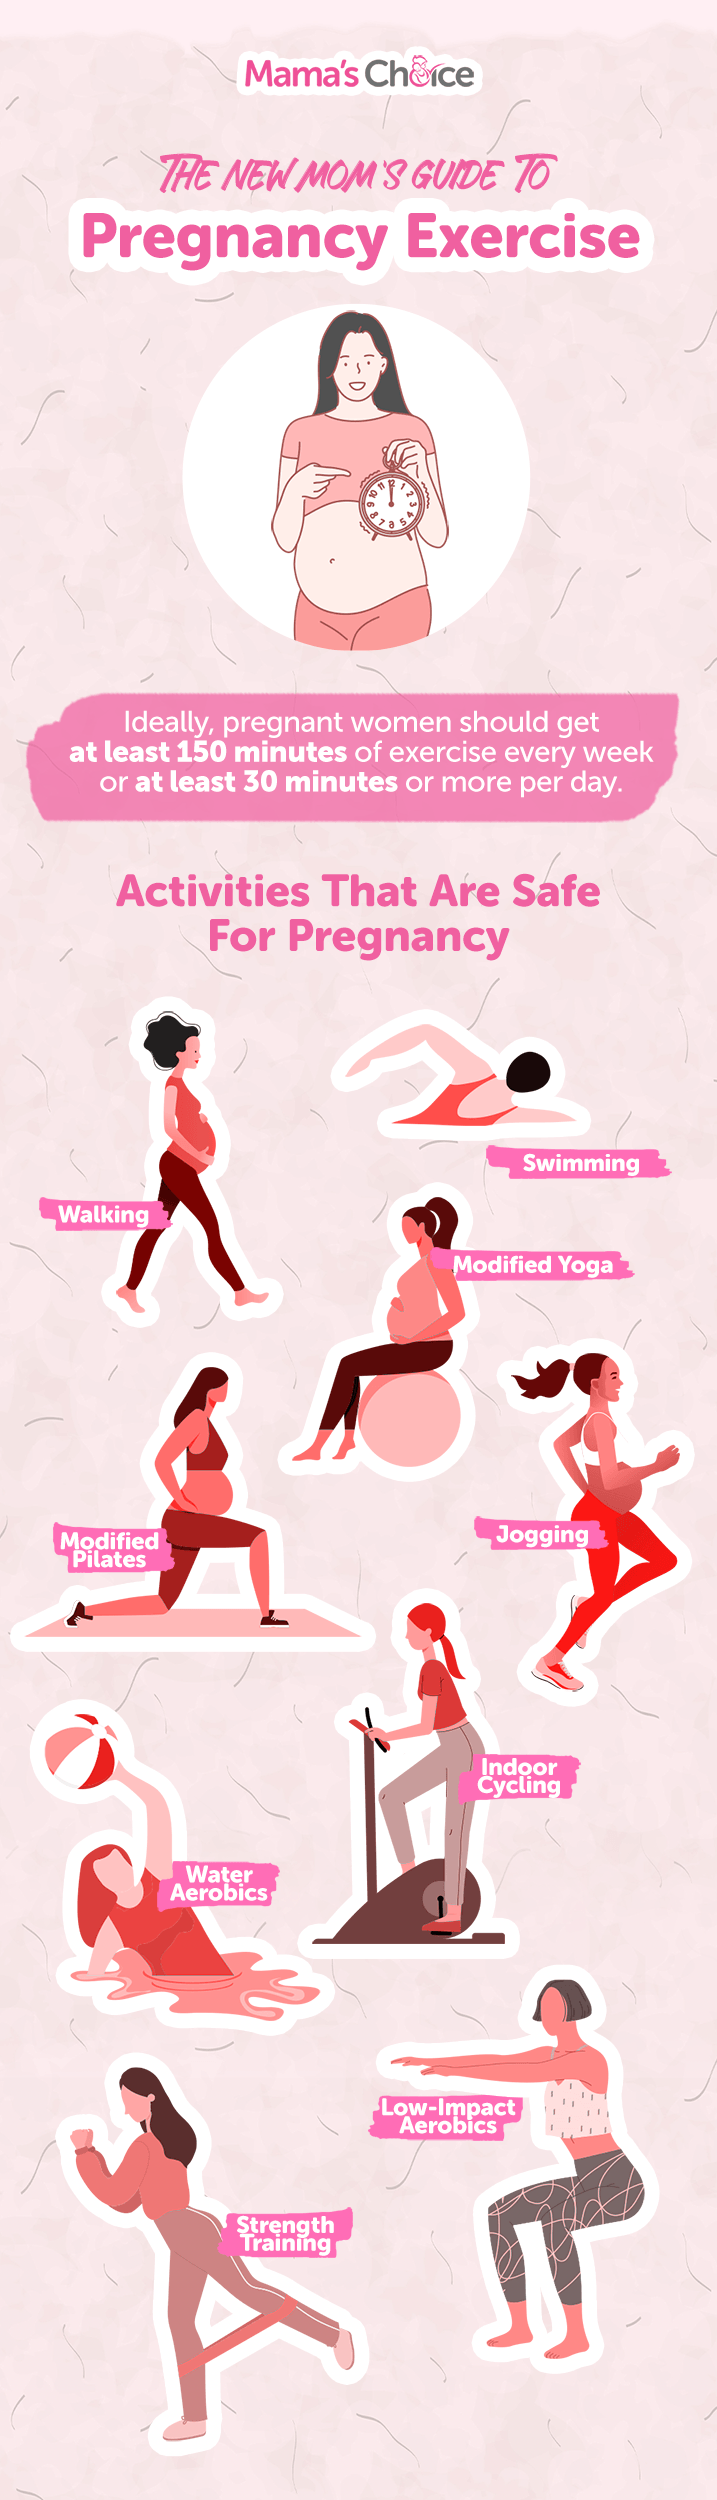 Pregnancy Exercise Infographic